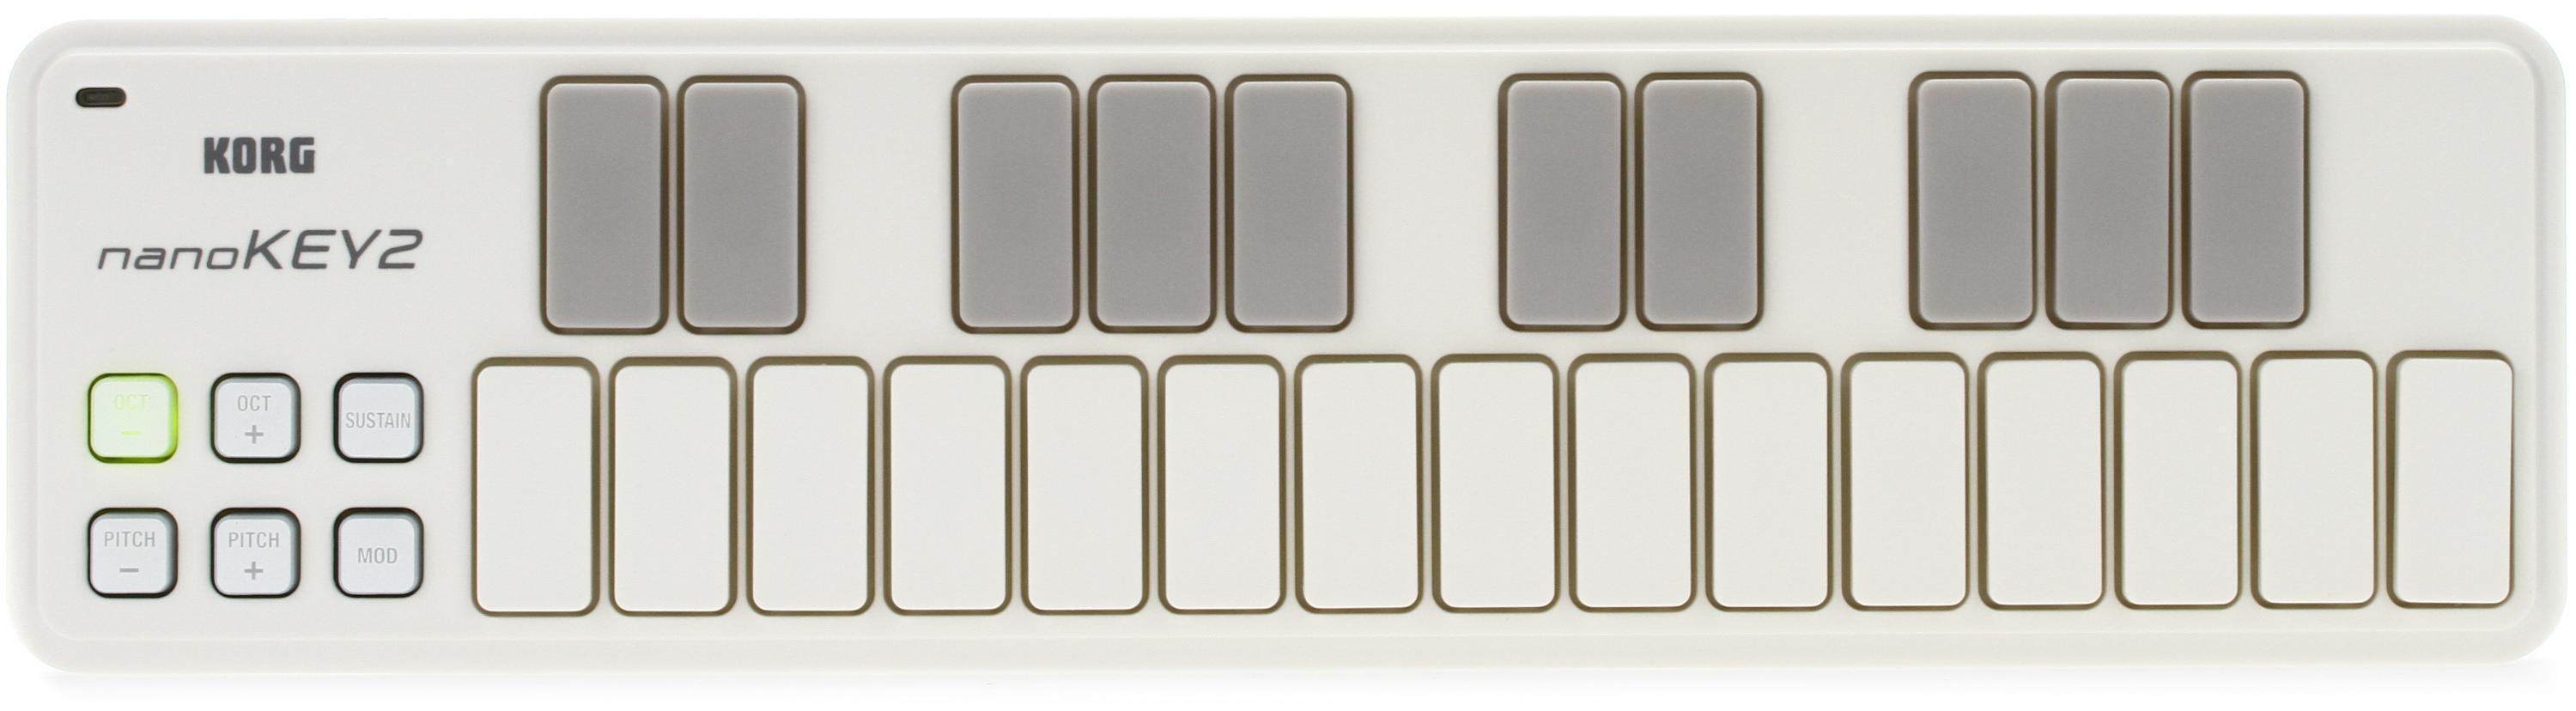 Korg nanoKEY2 25-key Keyboard Controller - White